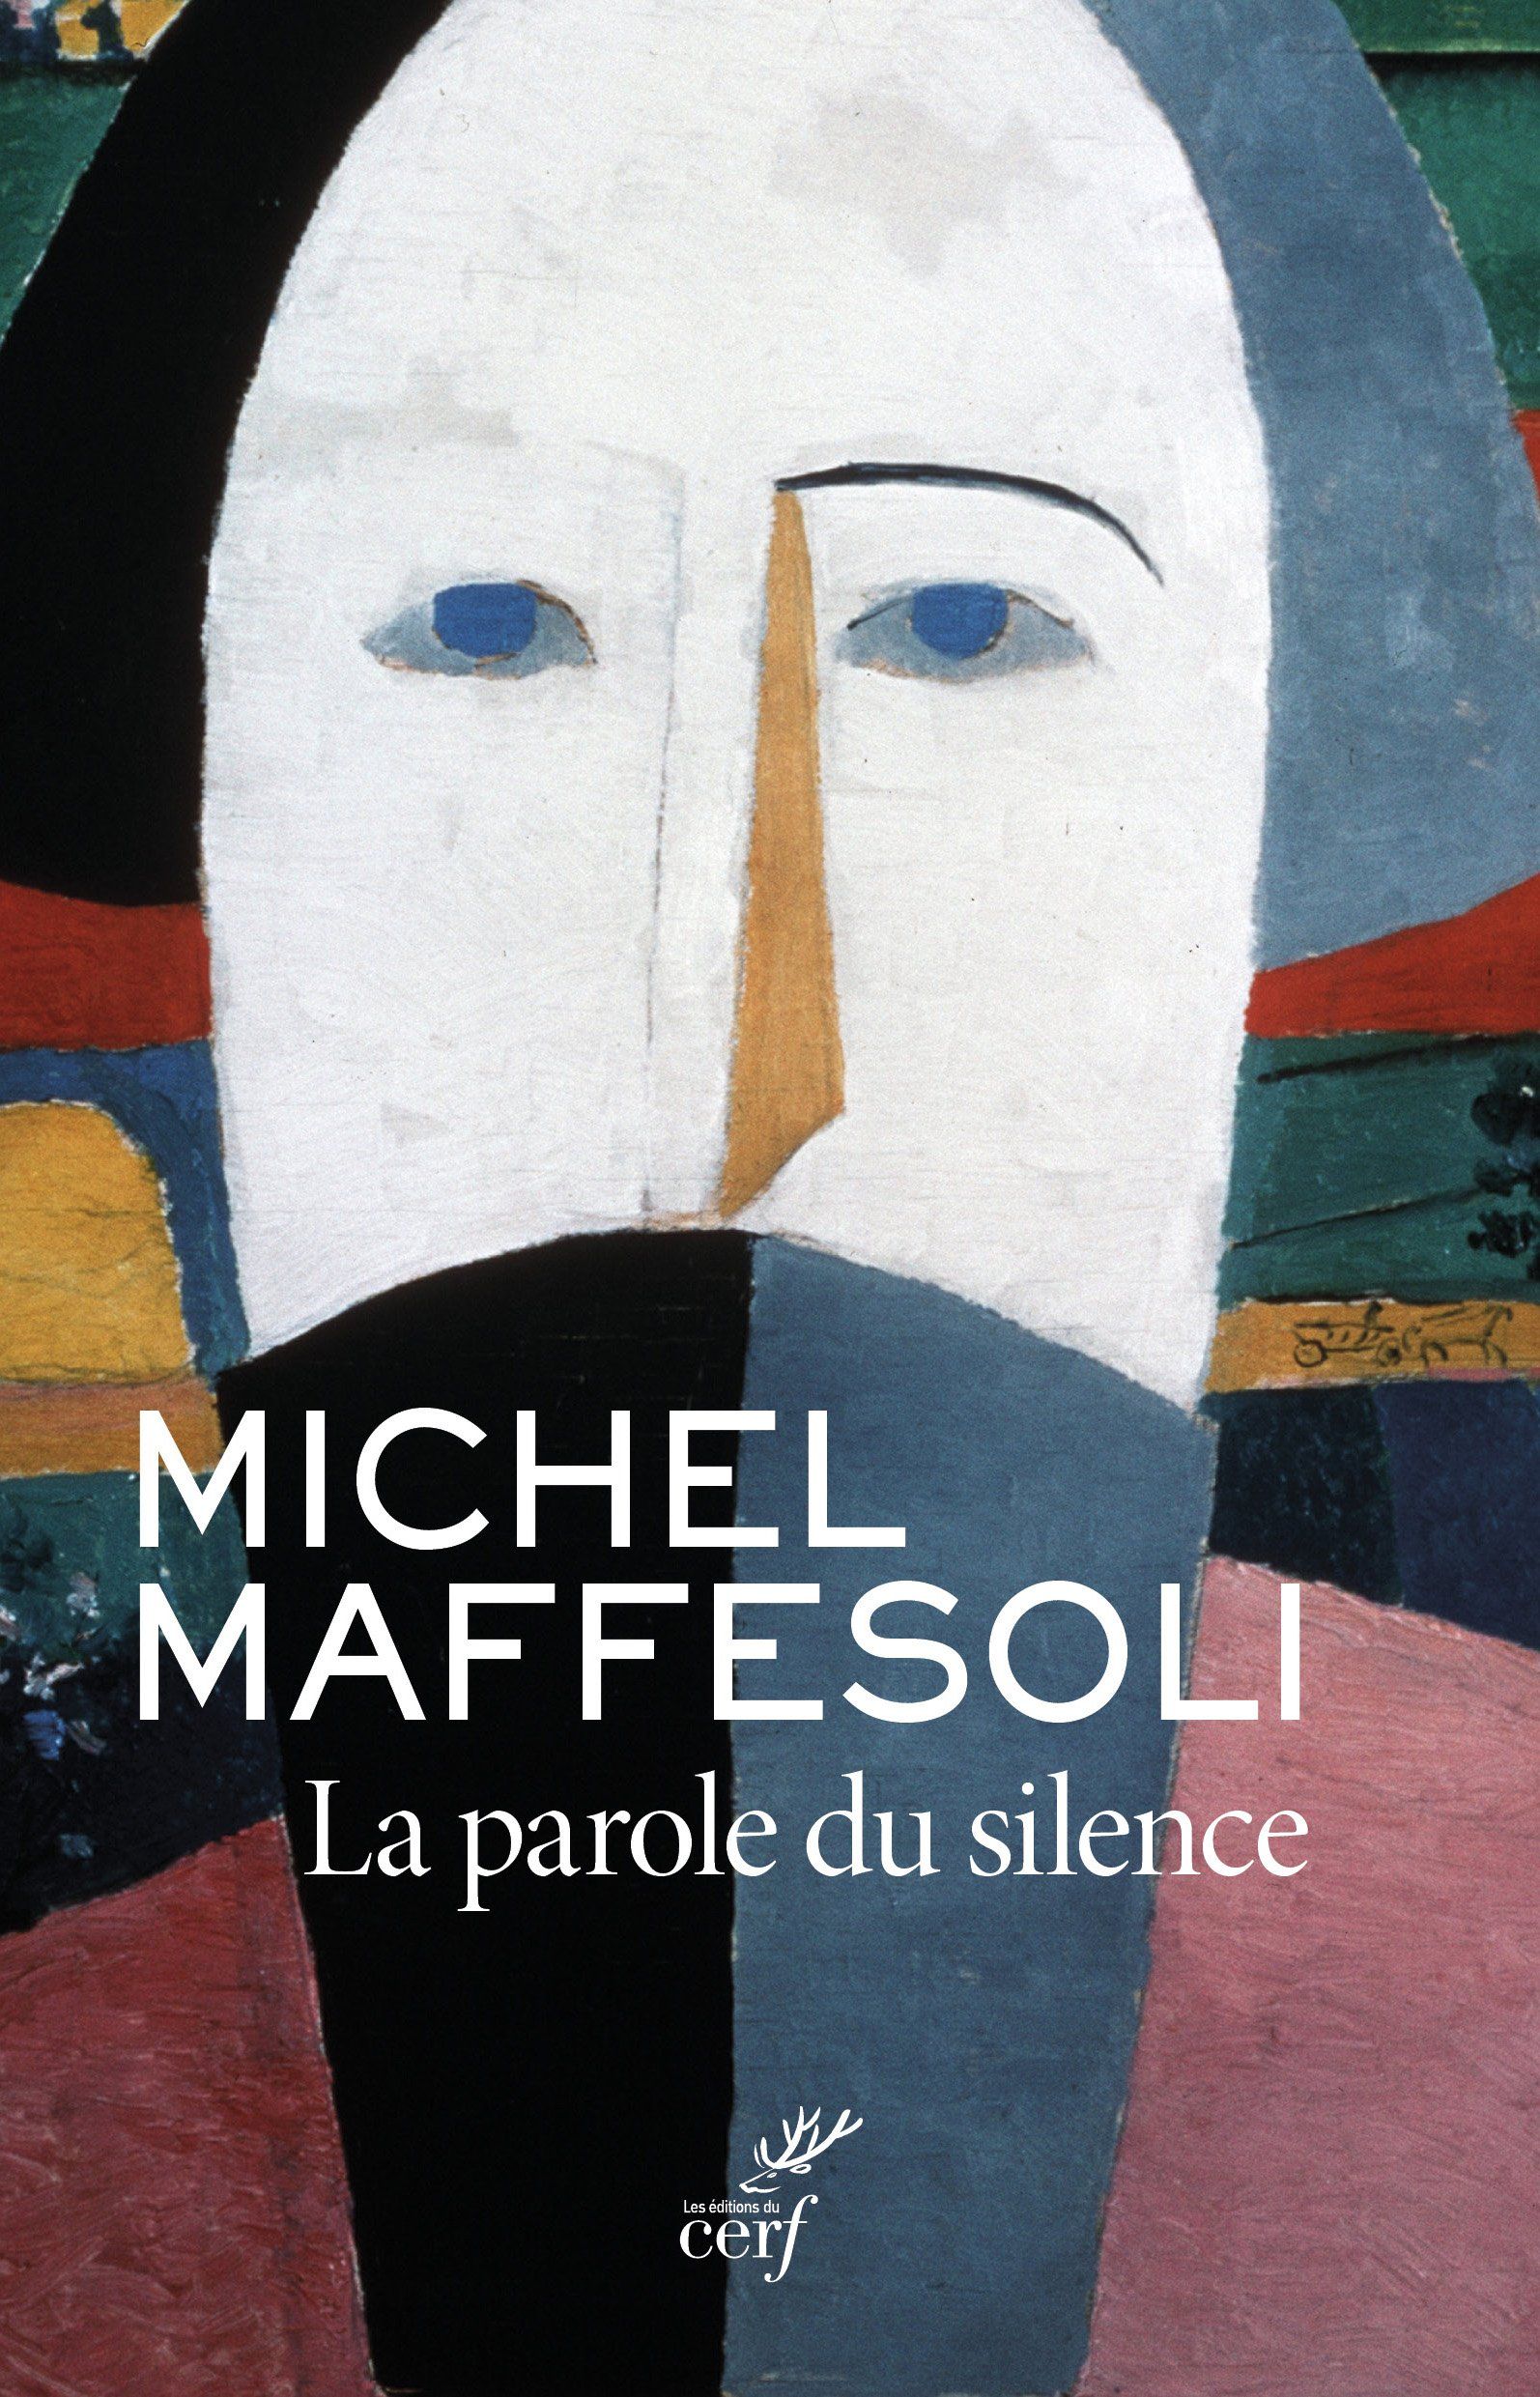 Michel Maffesoli, La parole du silence